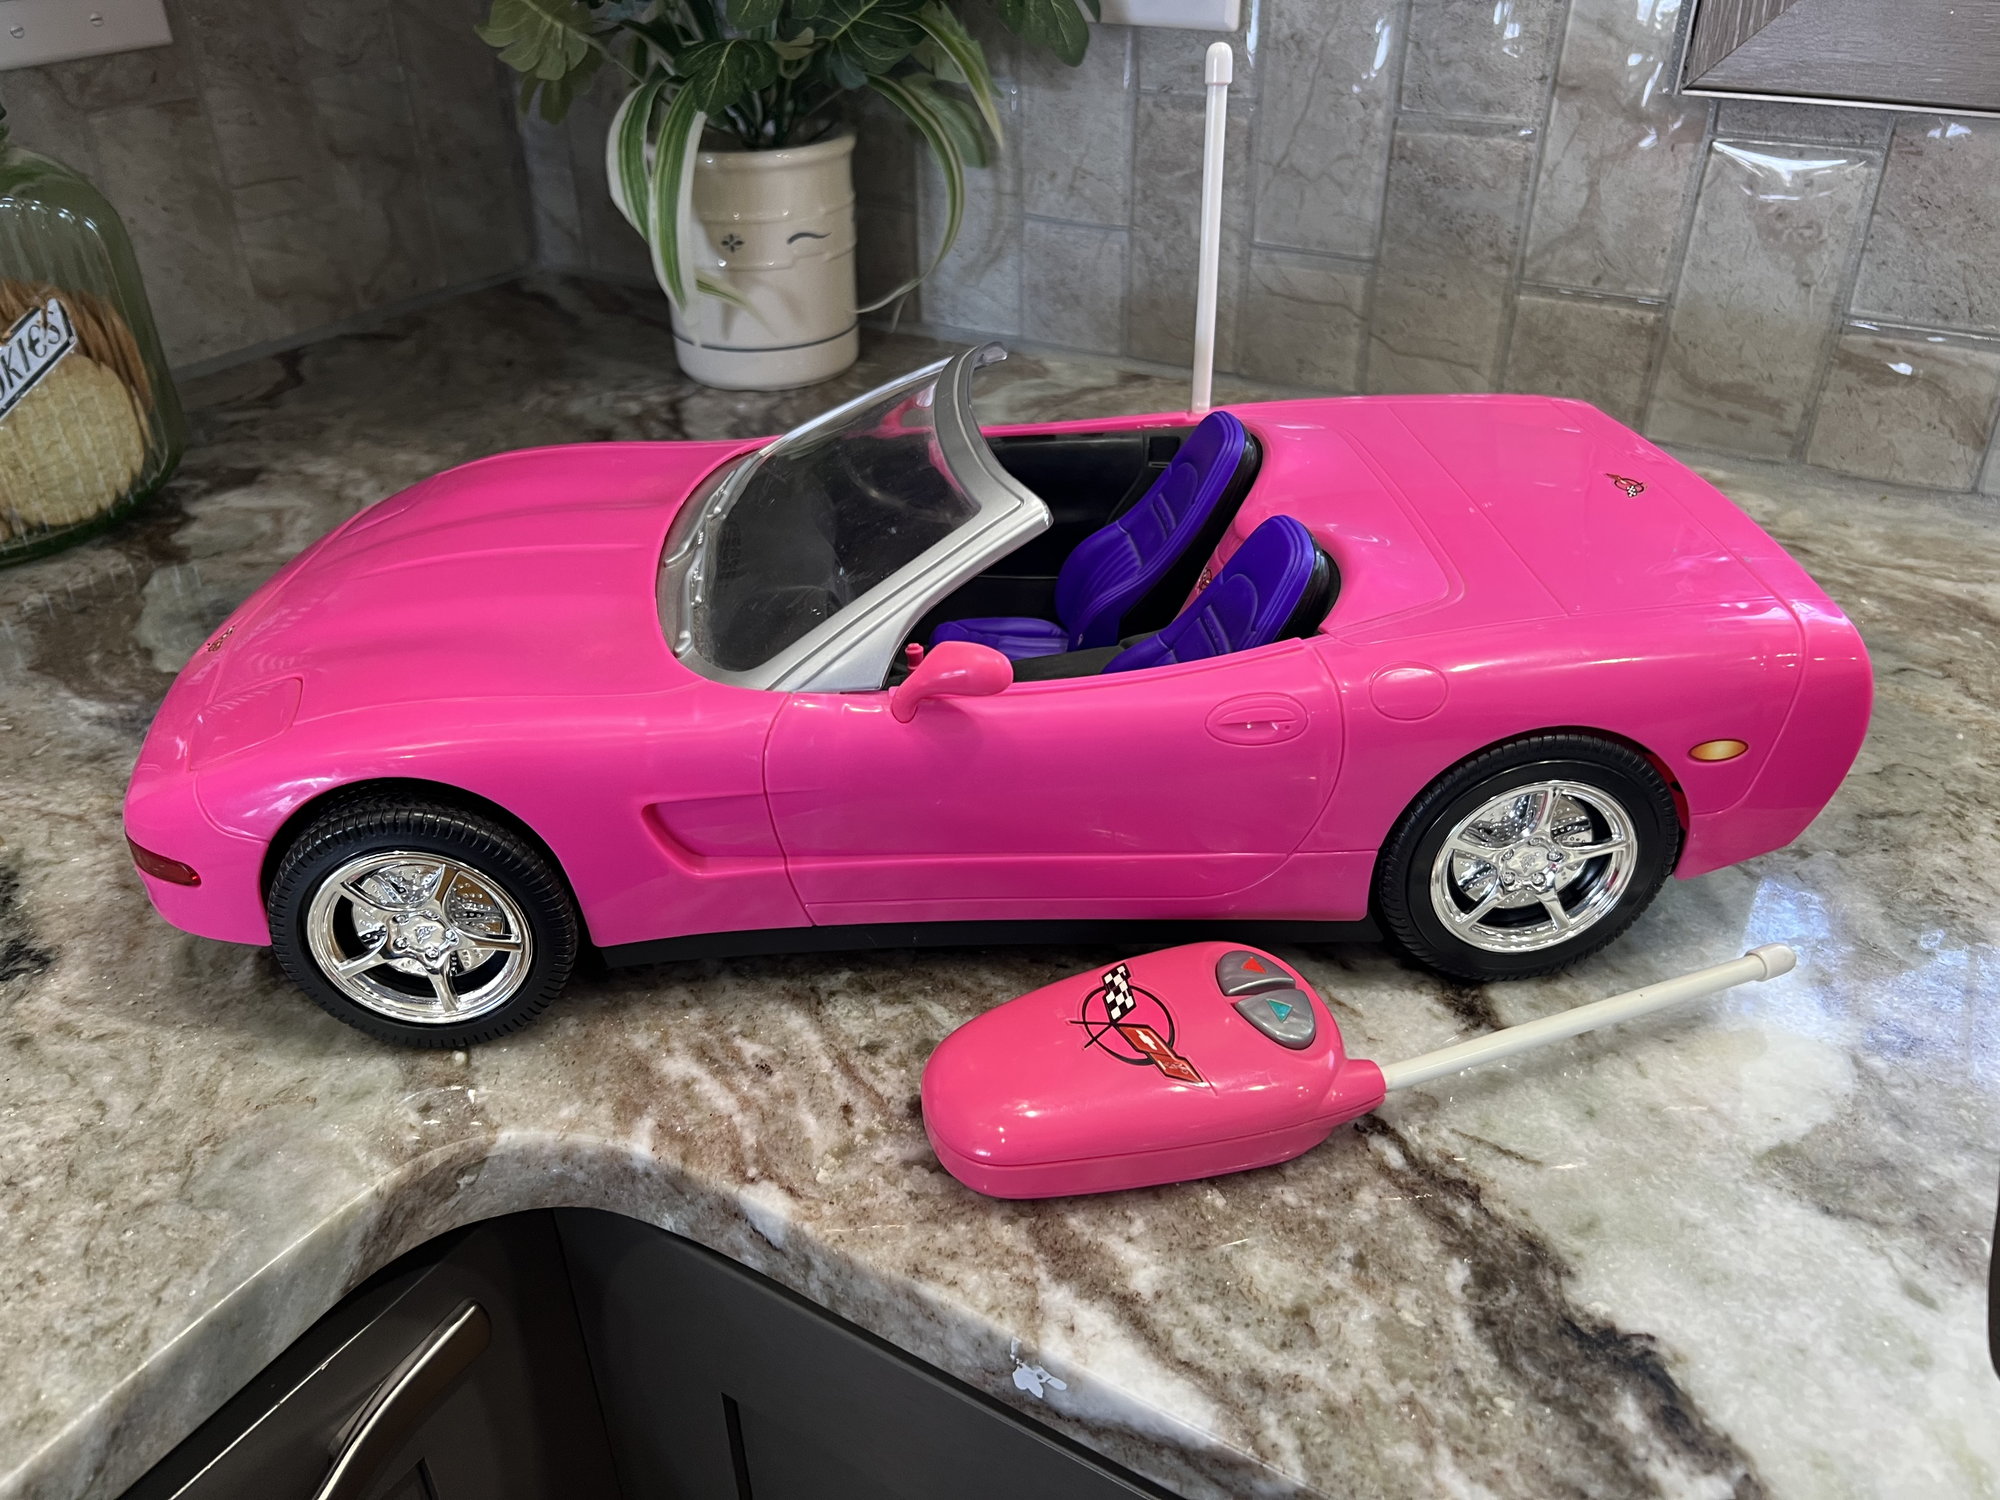 2001 Barbie Remote Control Corvette Convertible Pink Car Mattel W/ Remote  Tested